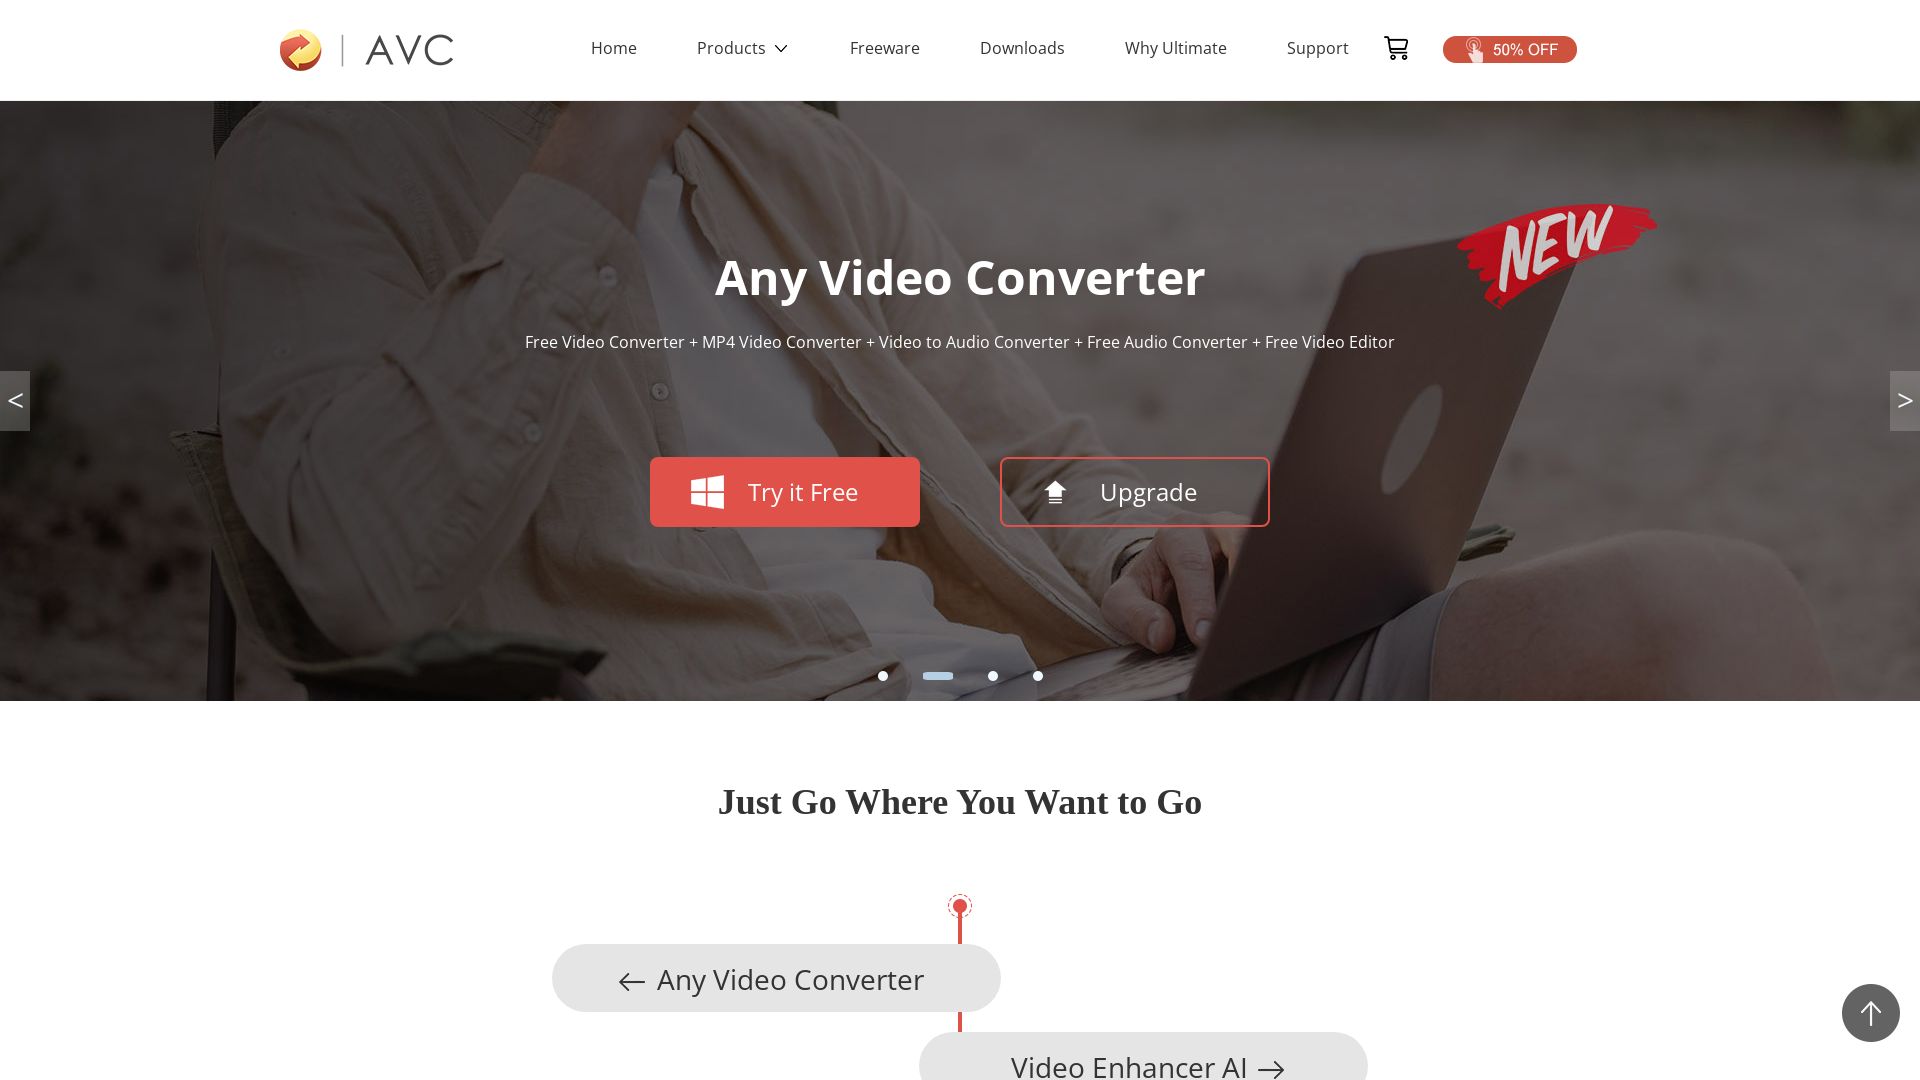 Website status any-video-converter.com is   ONLINE